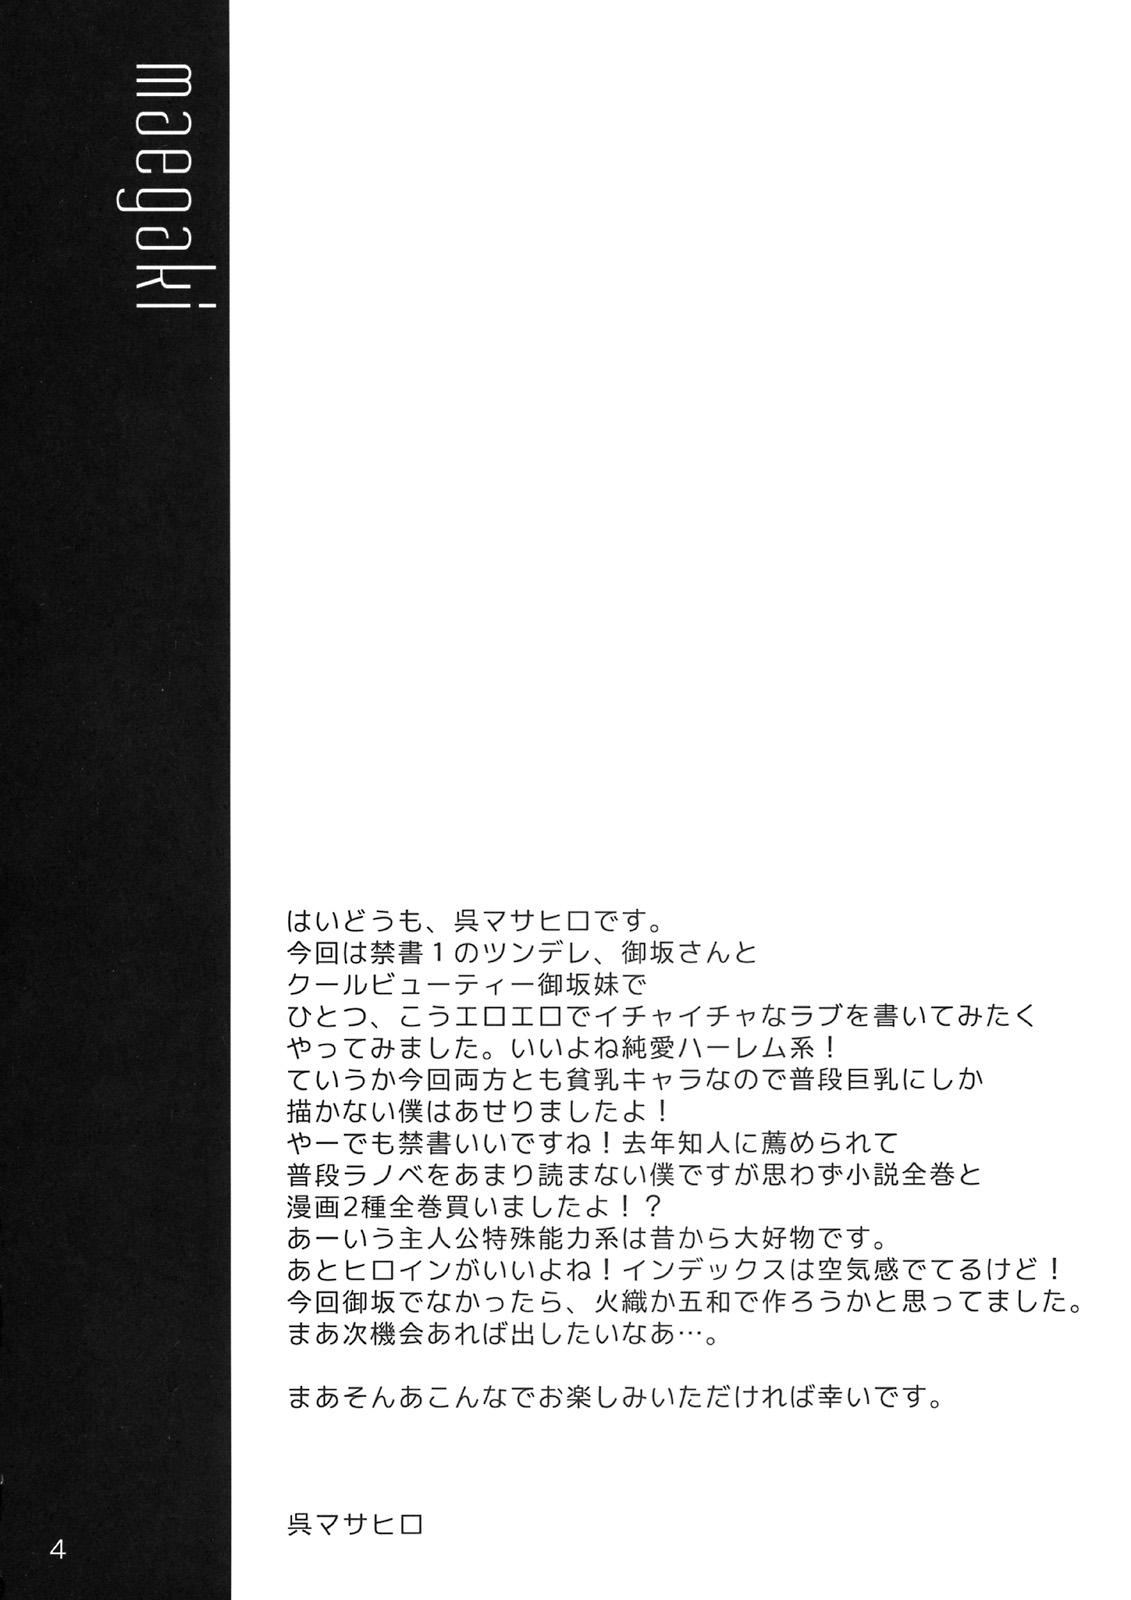 Stretching CL-ic #4 - Toaru majutsu no index Teamskeet - Page 3